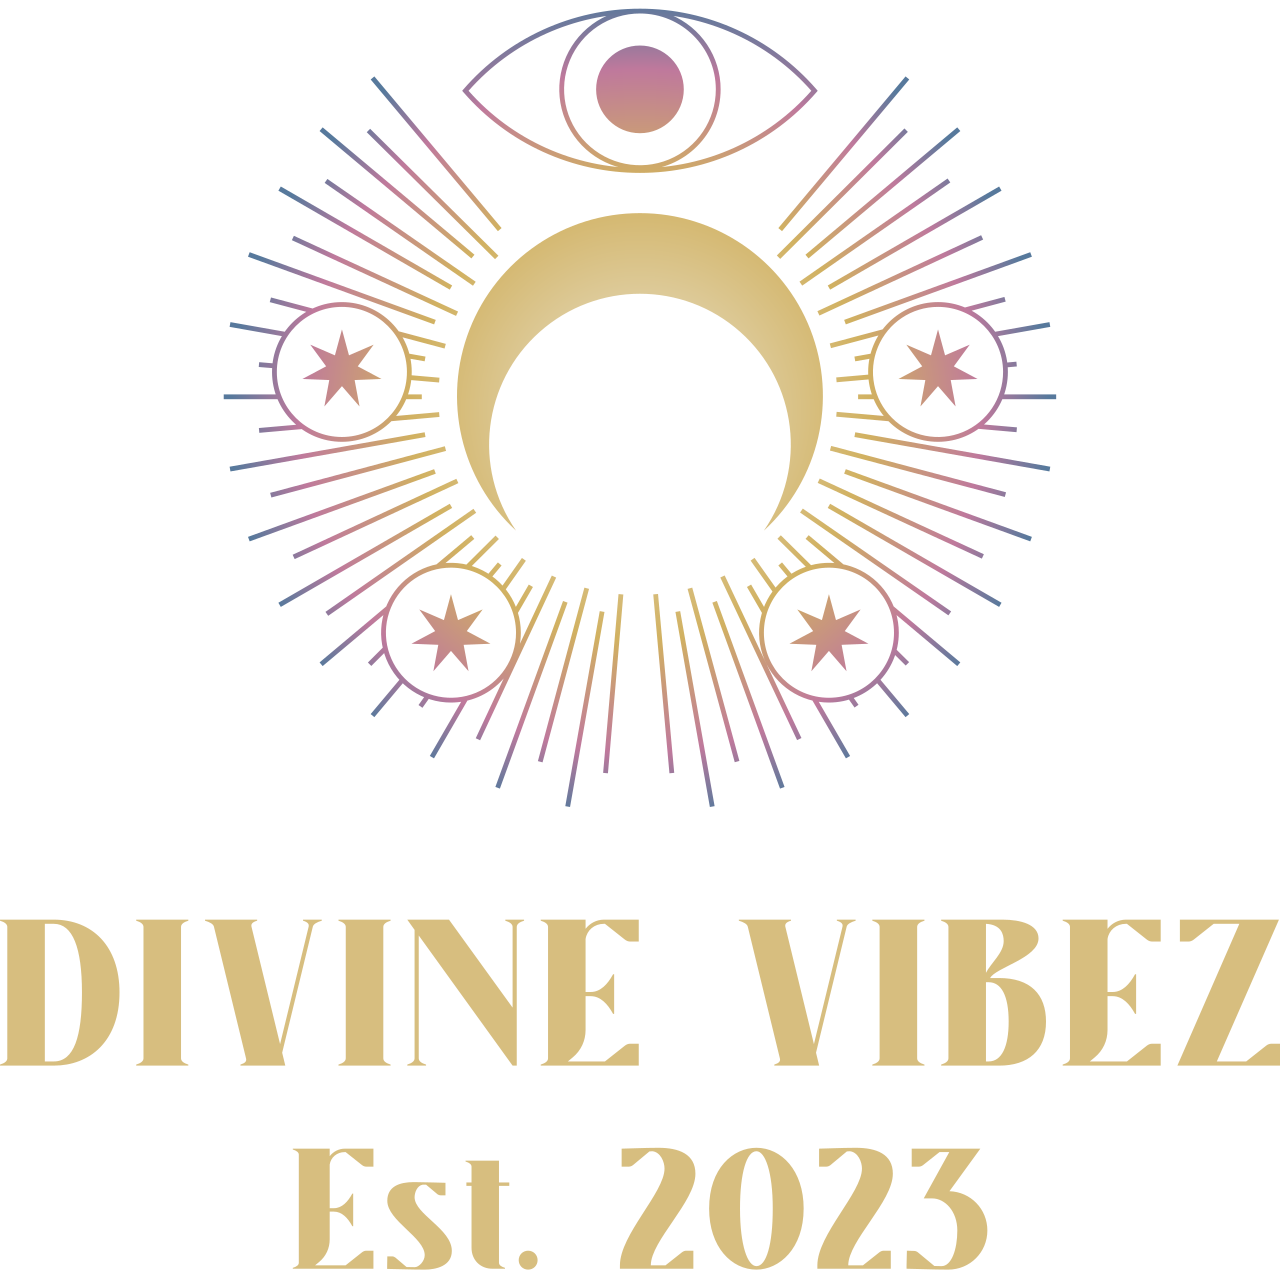 DIVINE VIBEZ's logo